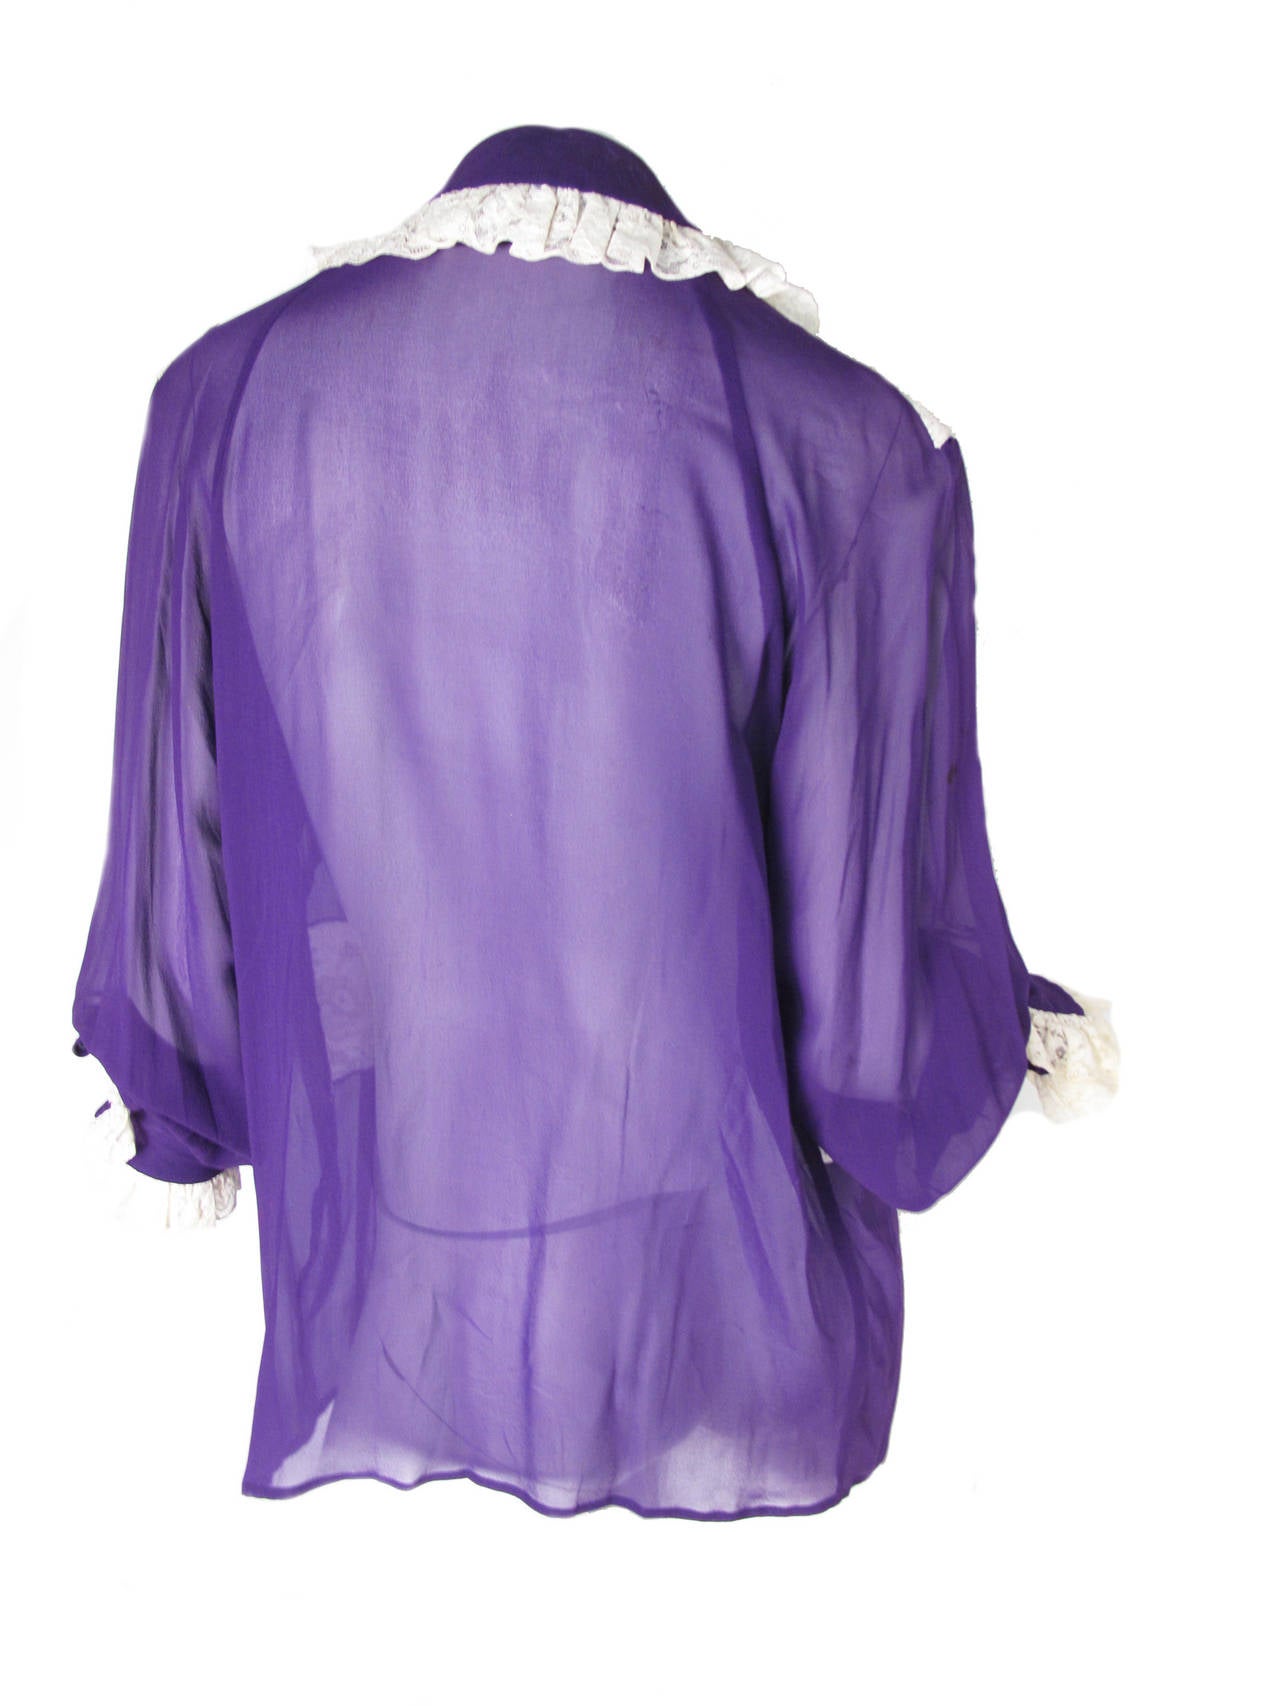 Gianfranco Ferre purple silk chiffon sheer blouse with white ruffle collar and rhinestone buttons.  40